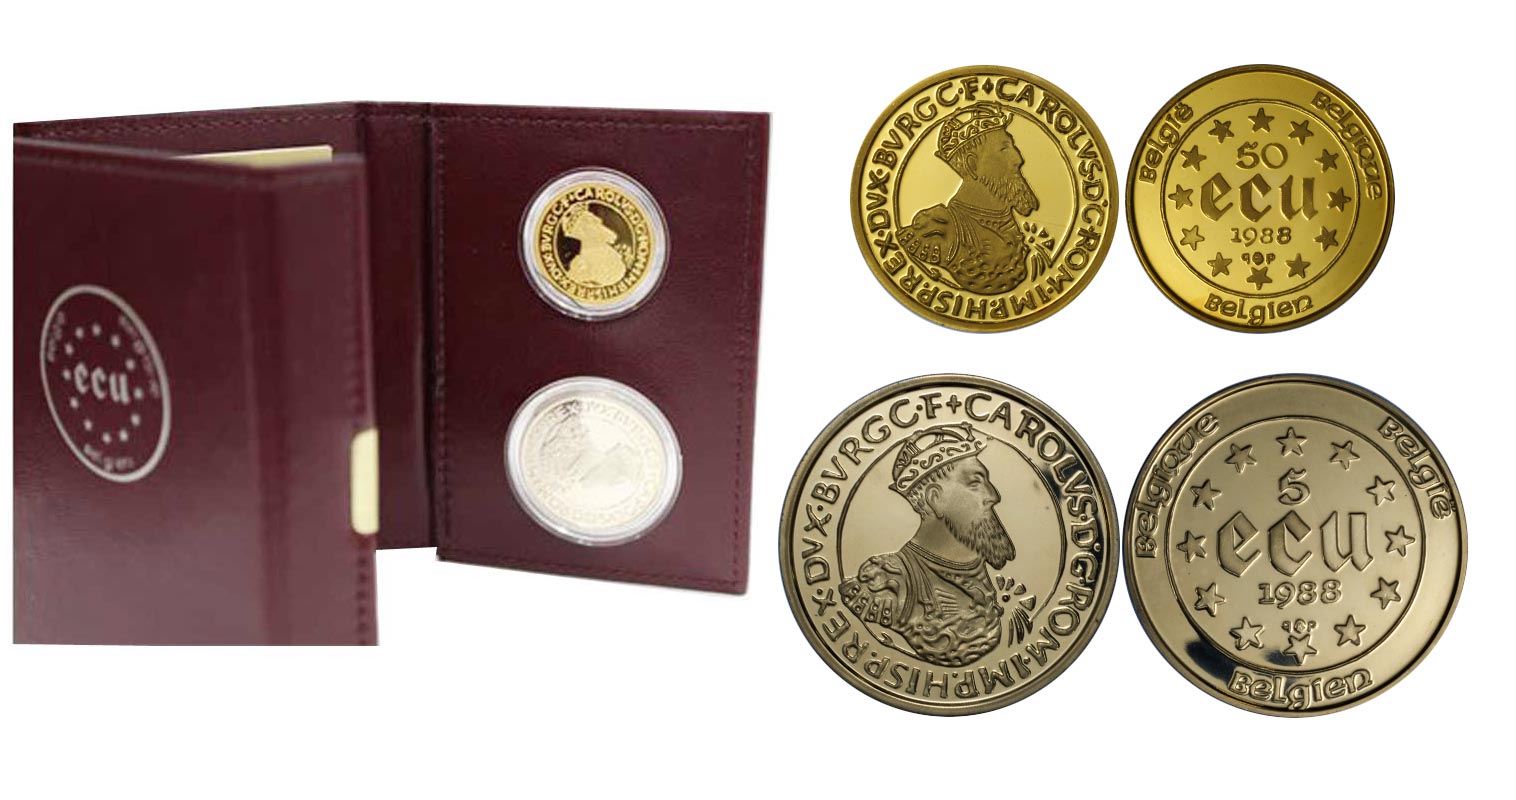 Carlo V - 50 ecu gr. 17,27 in oro 900/000 e 5 ecu gr. 22,85 in ag. 835/000 - conf. originale